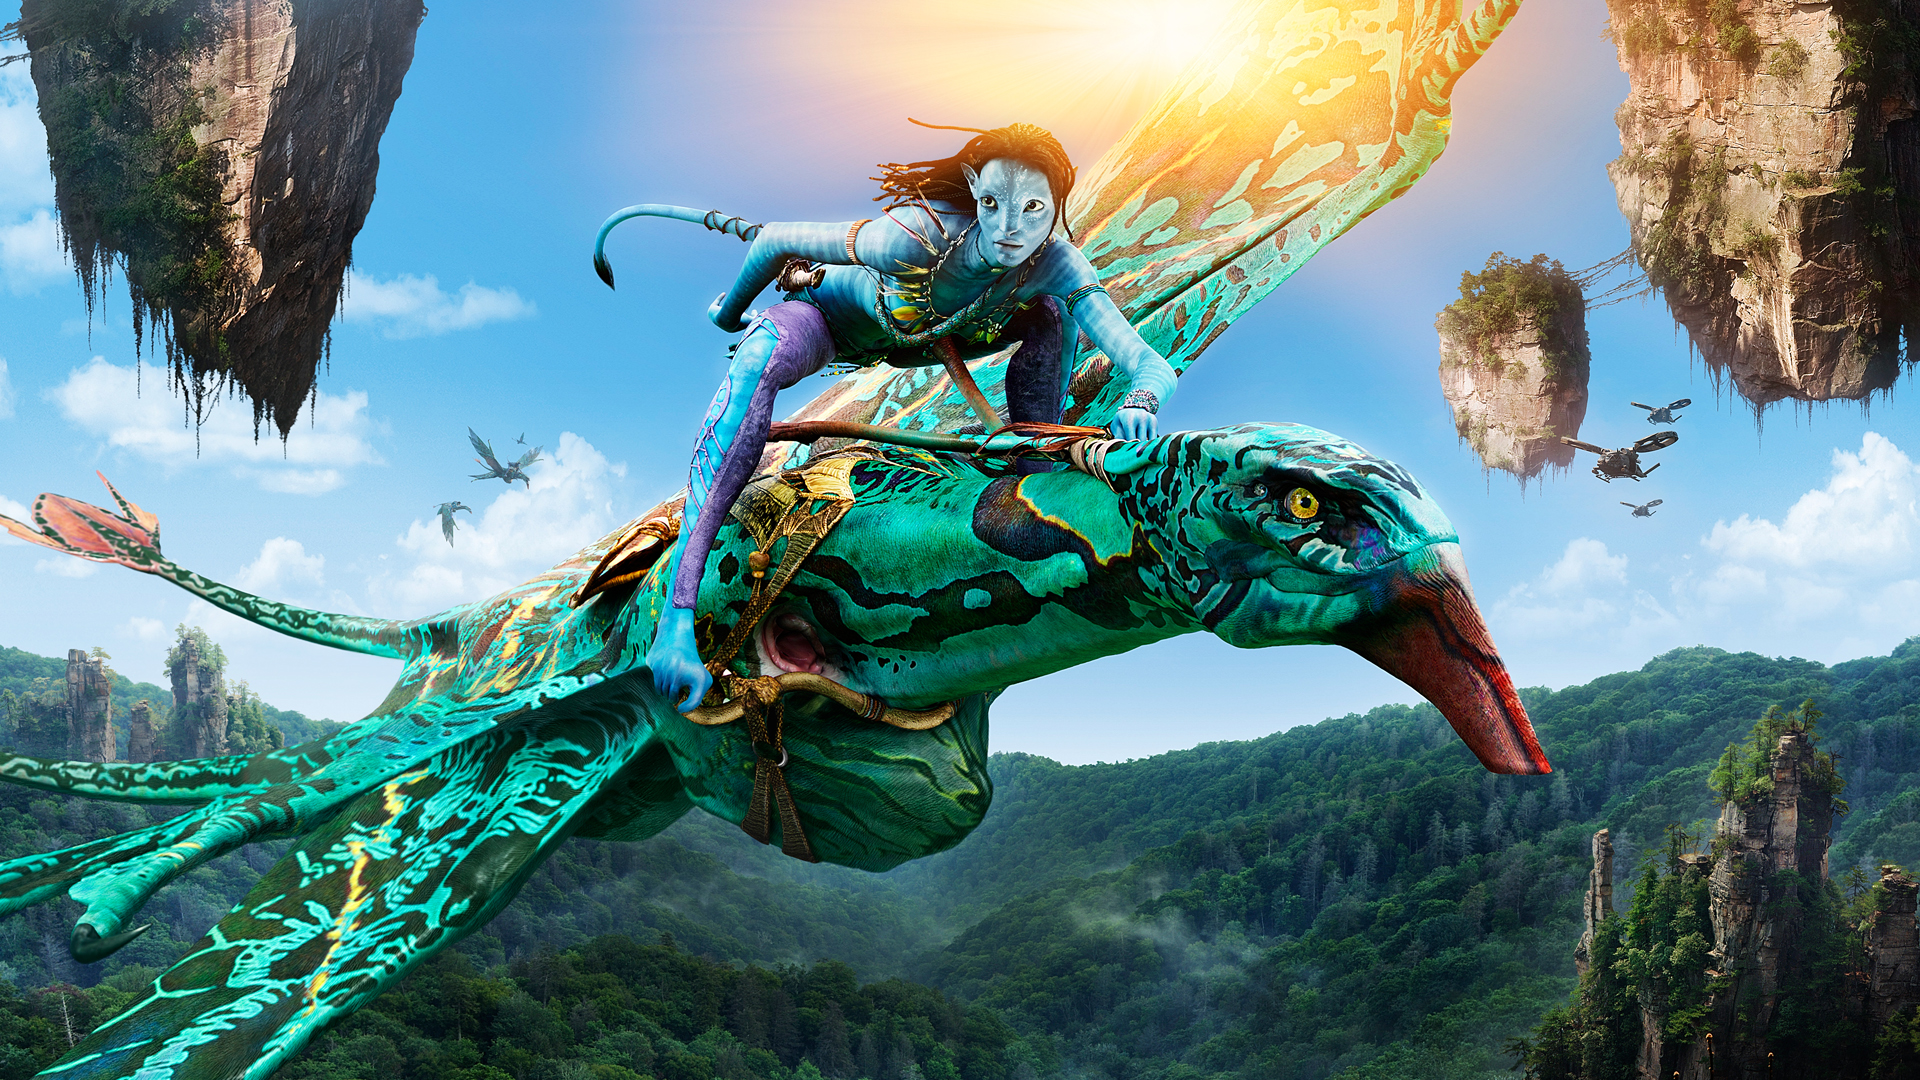 Download123𝘮ovies Avatar 2 The Way of Water 2022 FullMovie Free  MP4720p 1080p HD 4K EnglishSub  Bulios